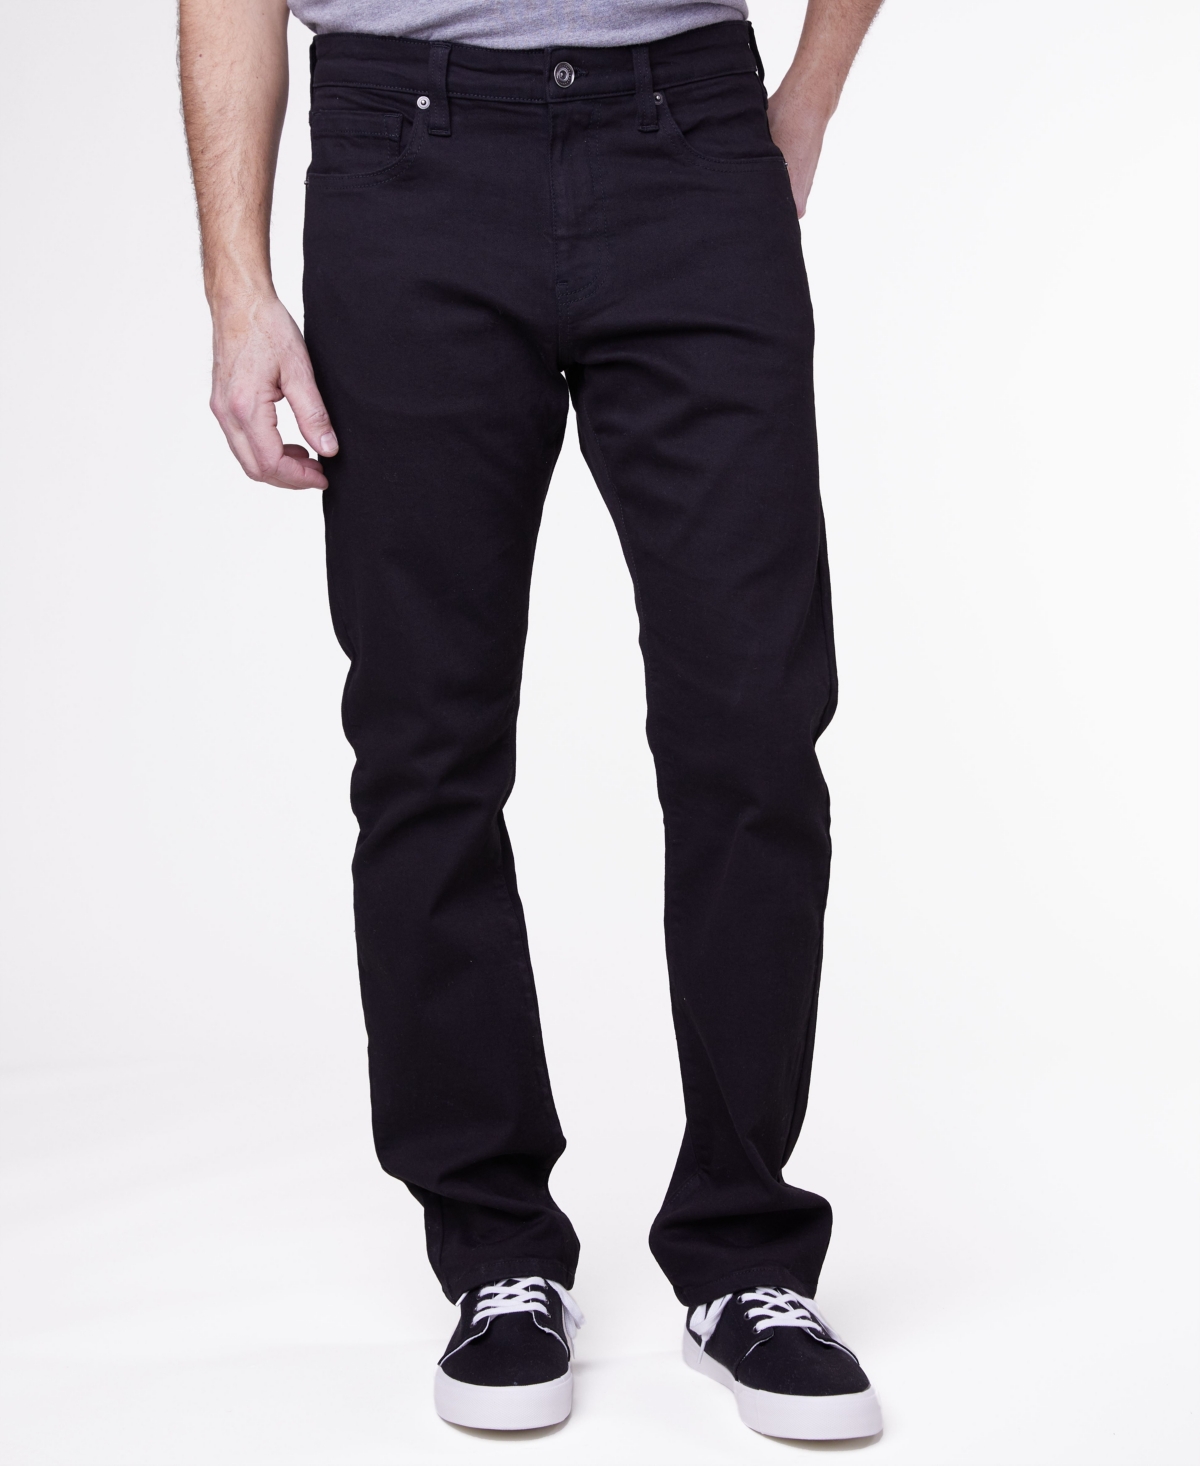 Men's Slim-Fit Stretch Jeans - Black